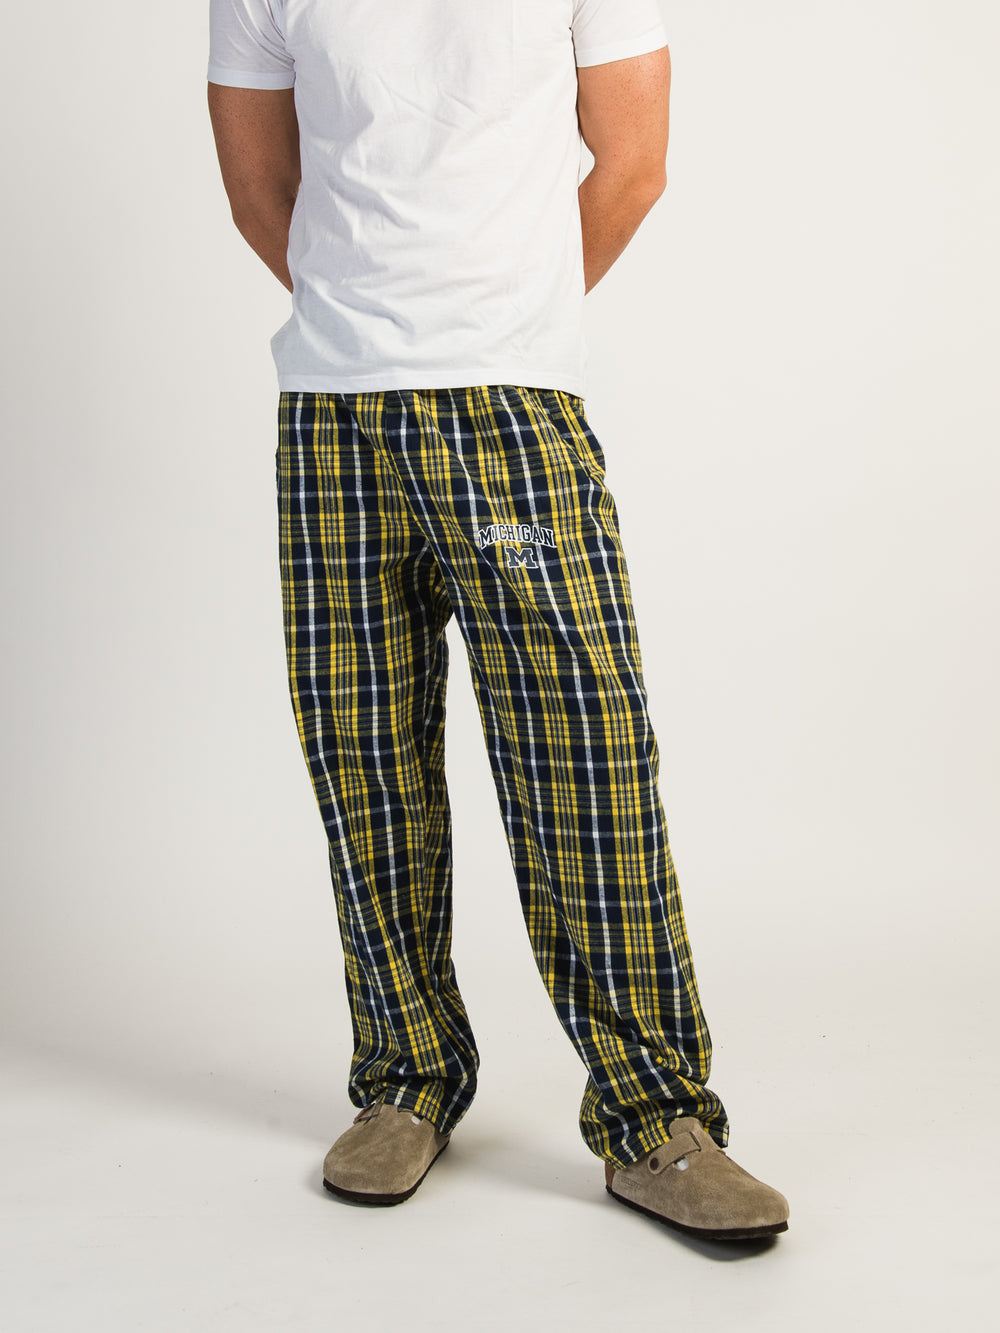 University of Michigan Child/Youth Printed Pajama Bottoms